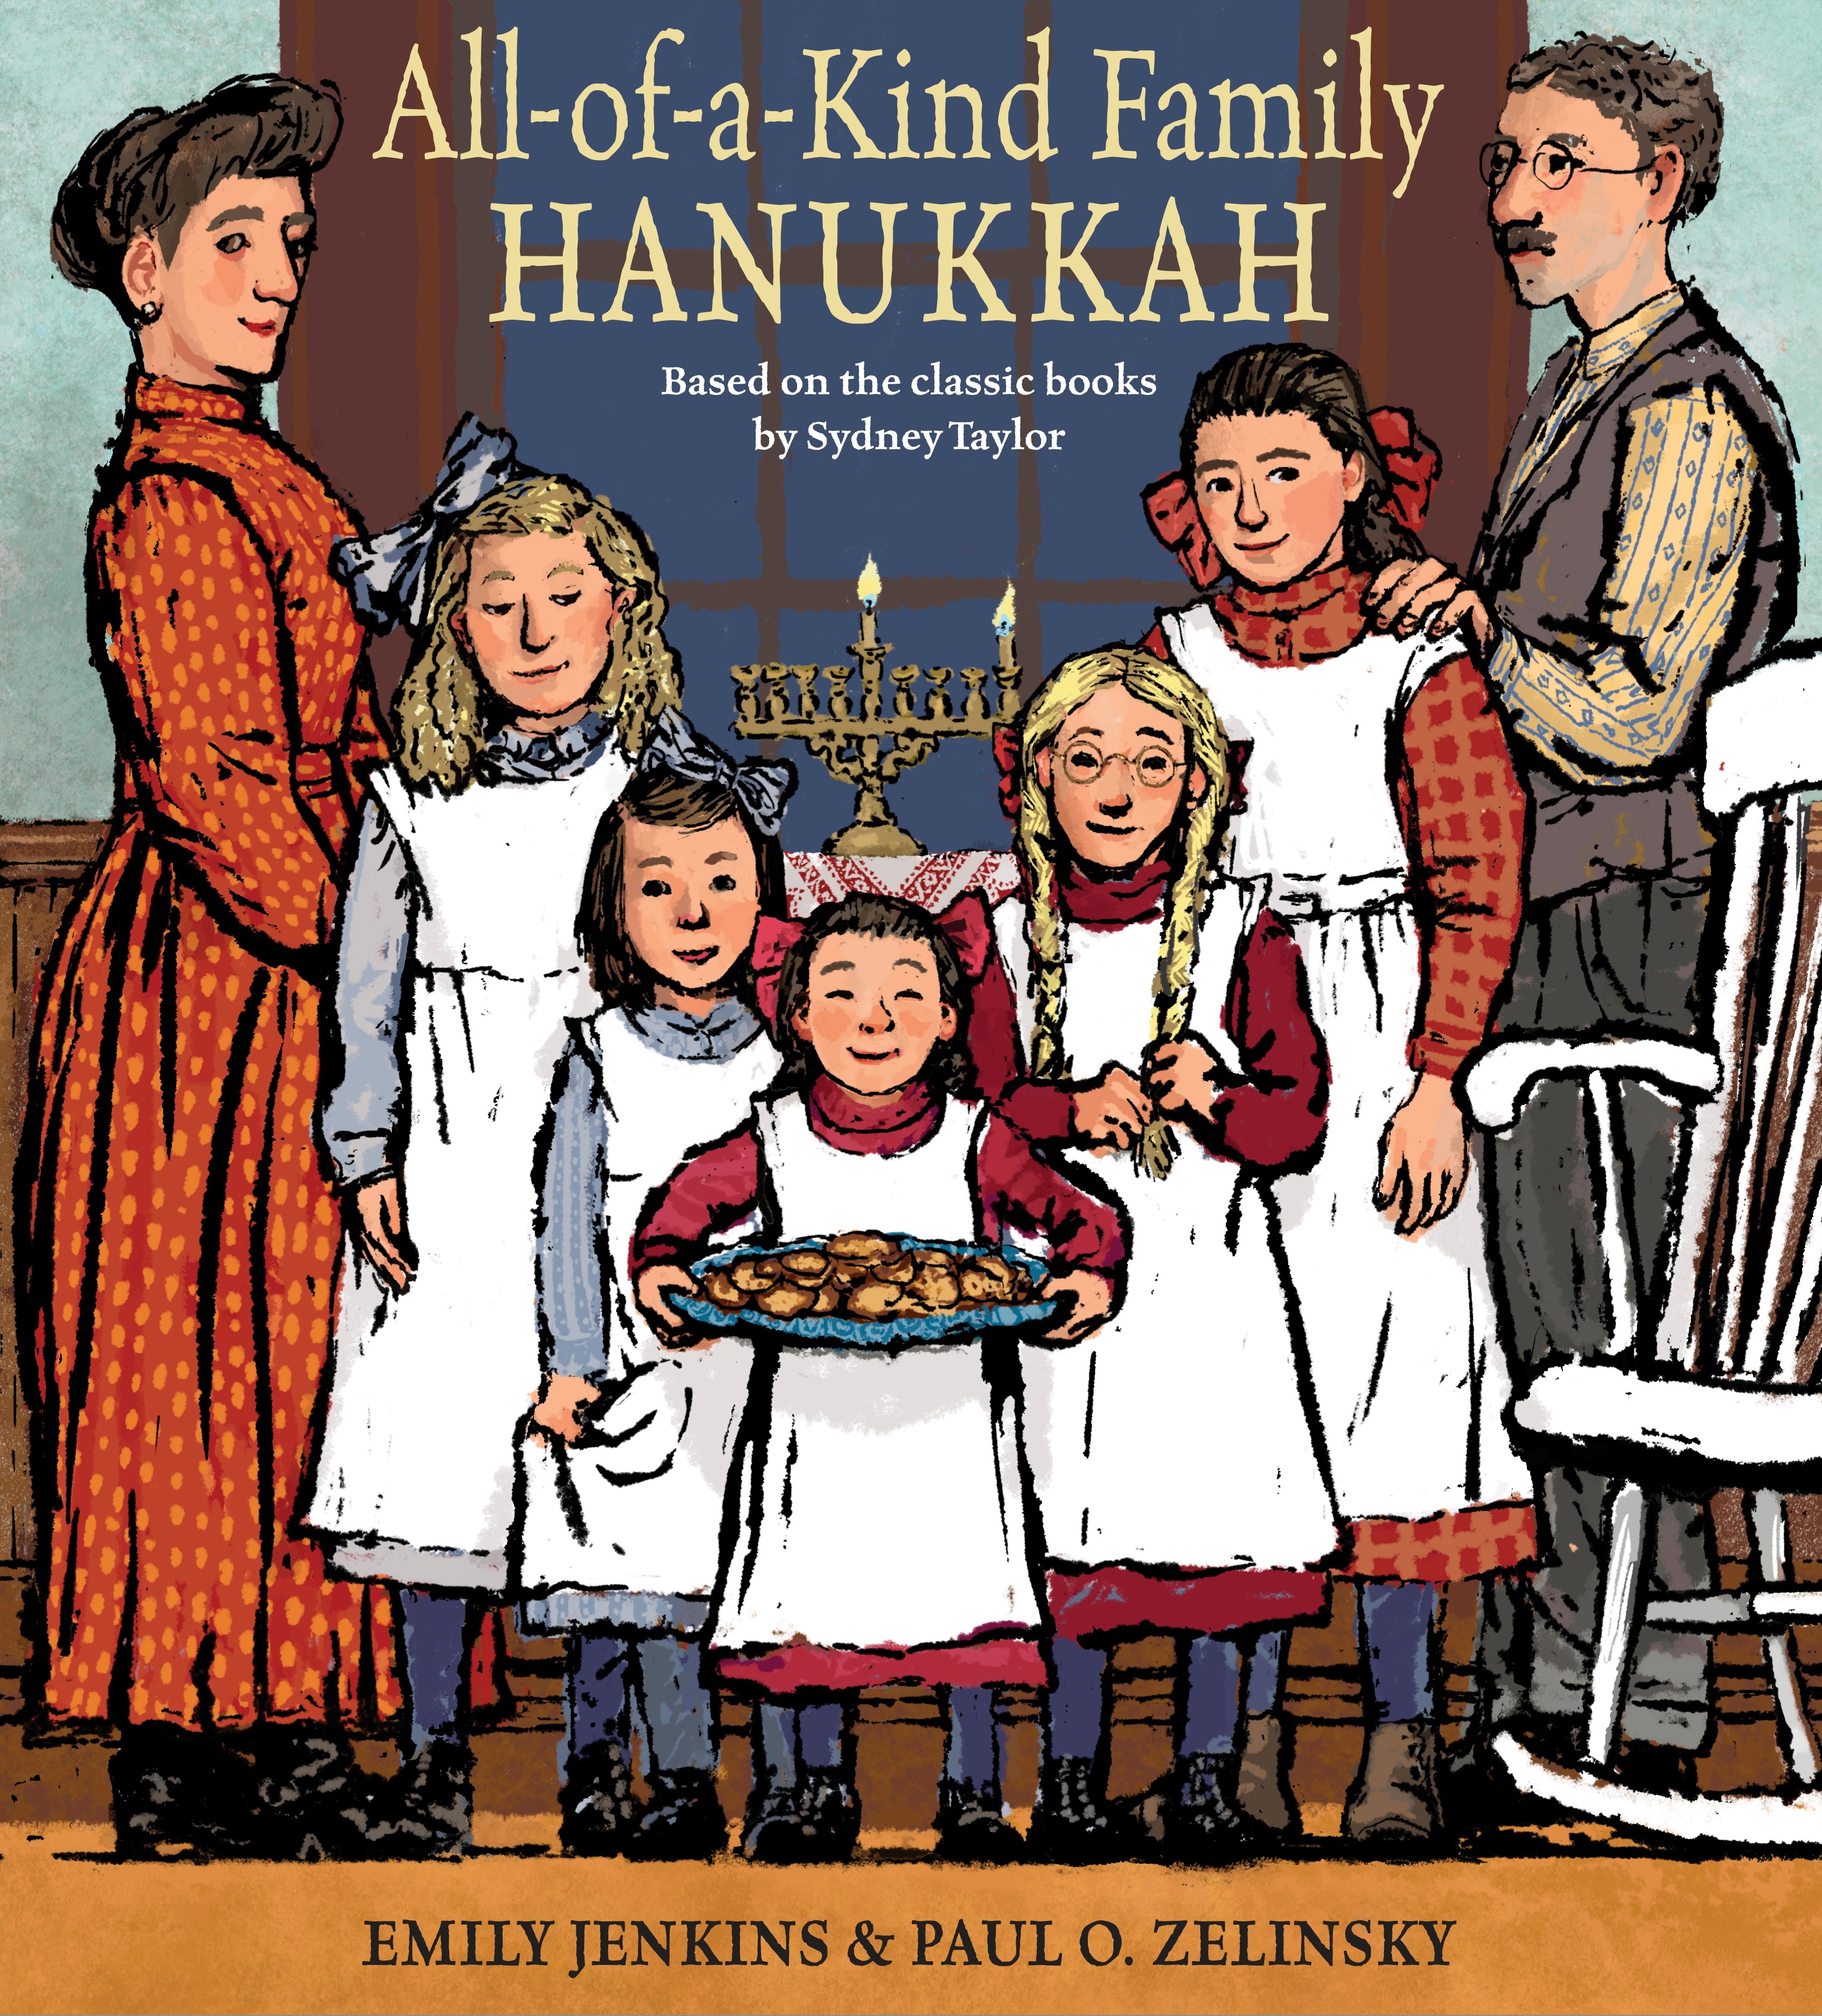 Sunday Story Time with Emily Jenkins & Paul O. Zelinsky (Author & Illustrator of All-of-a-Kind Family Hanukkah)